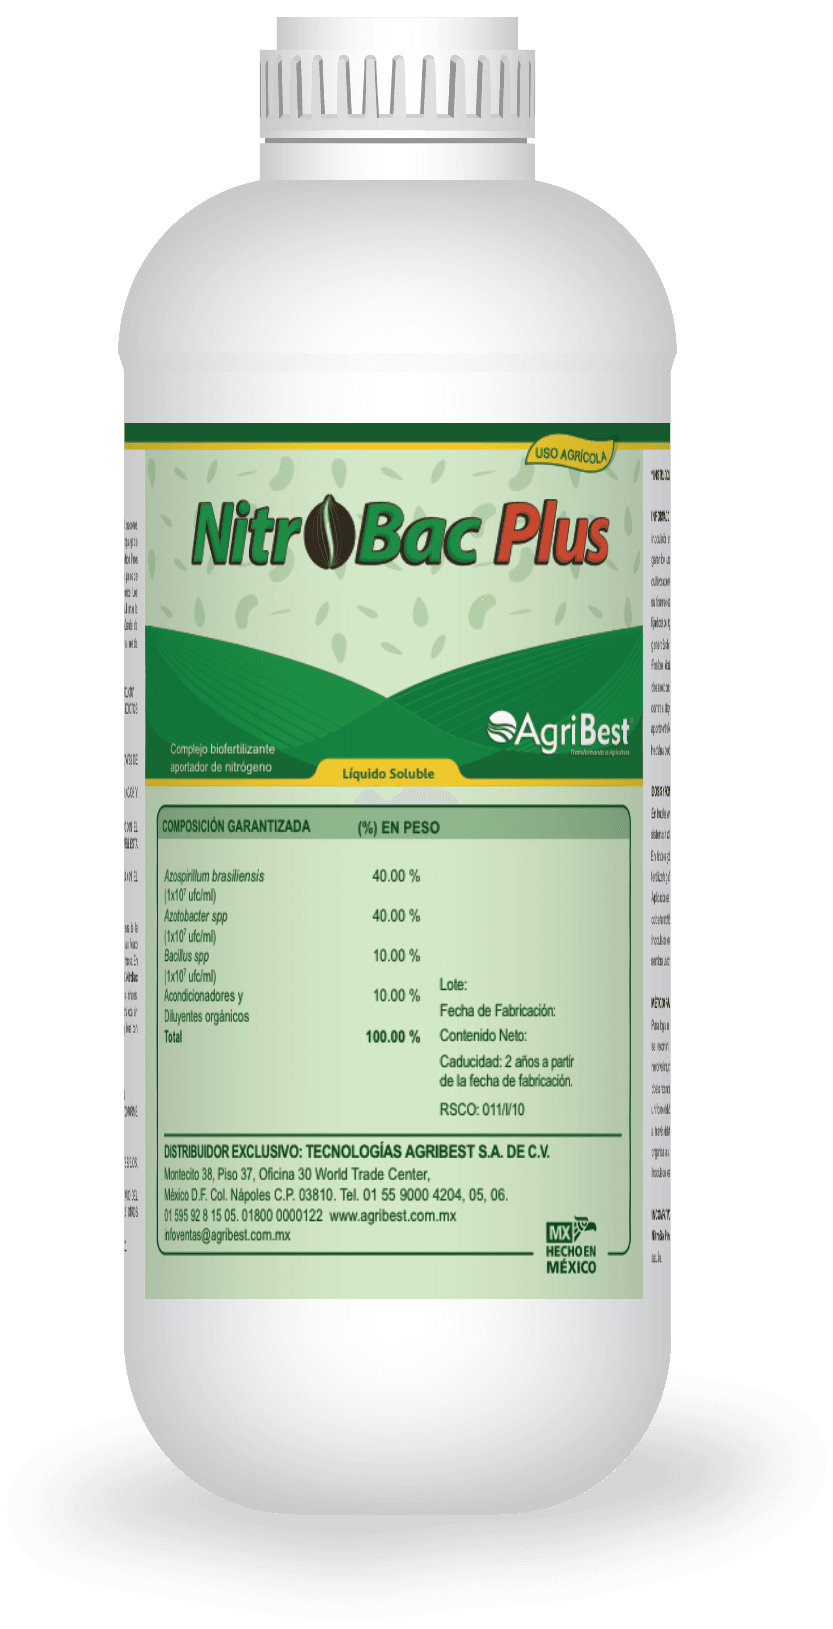 NitroBack Plus